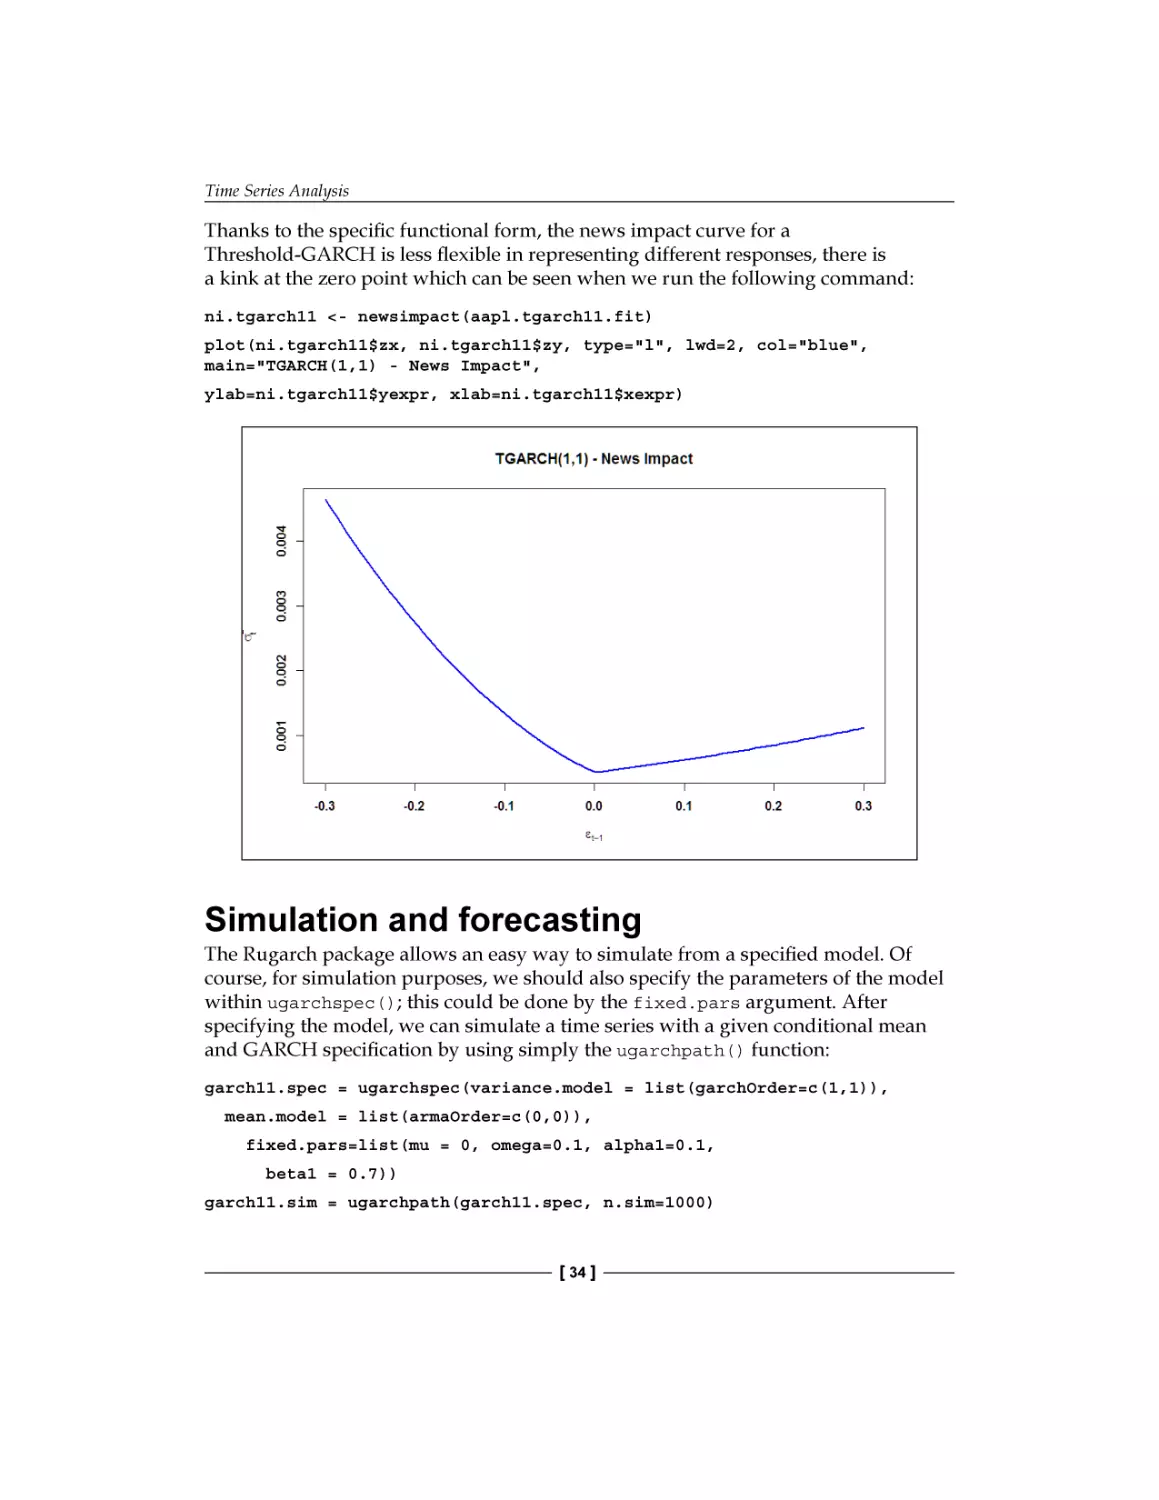 Simulation and forecasting